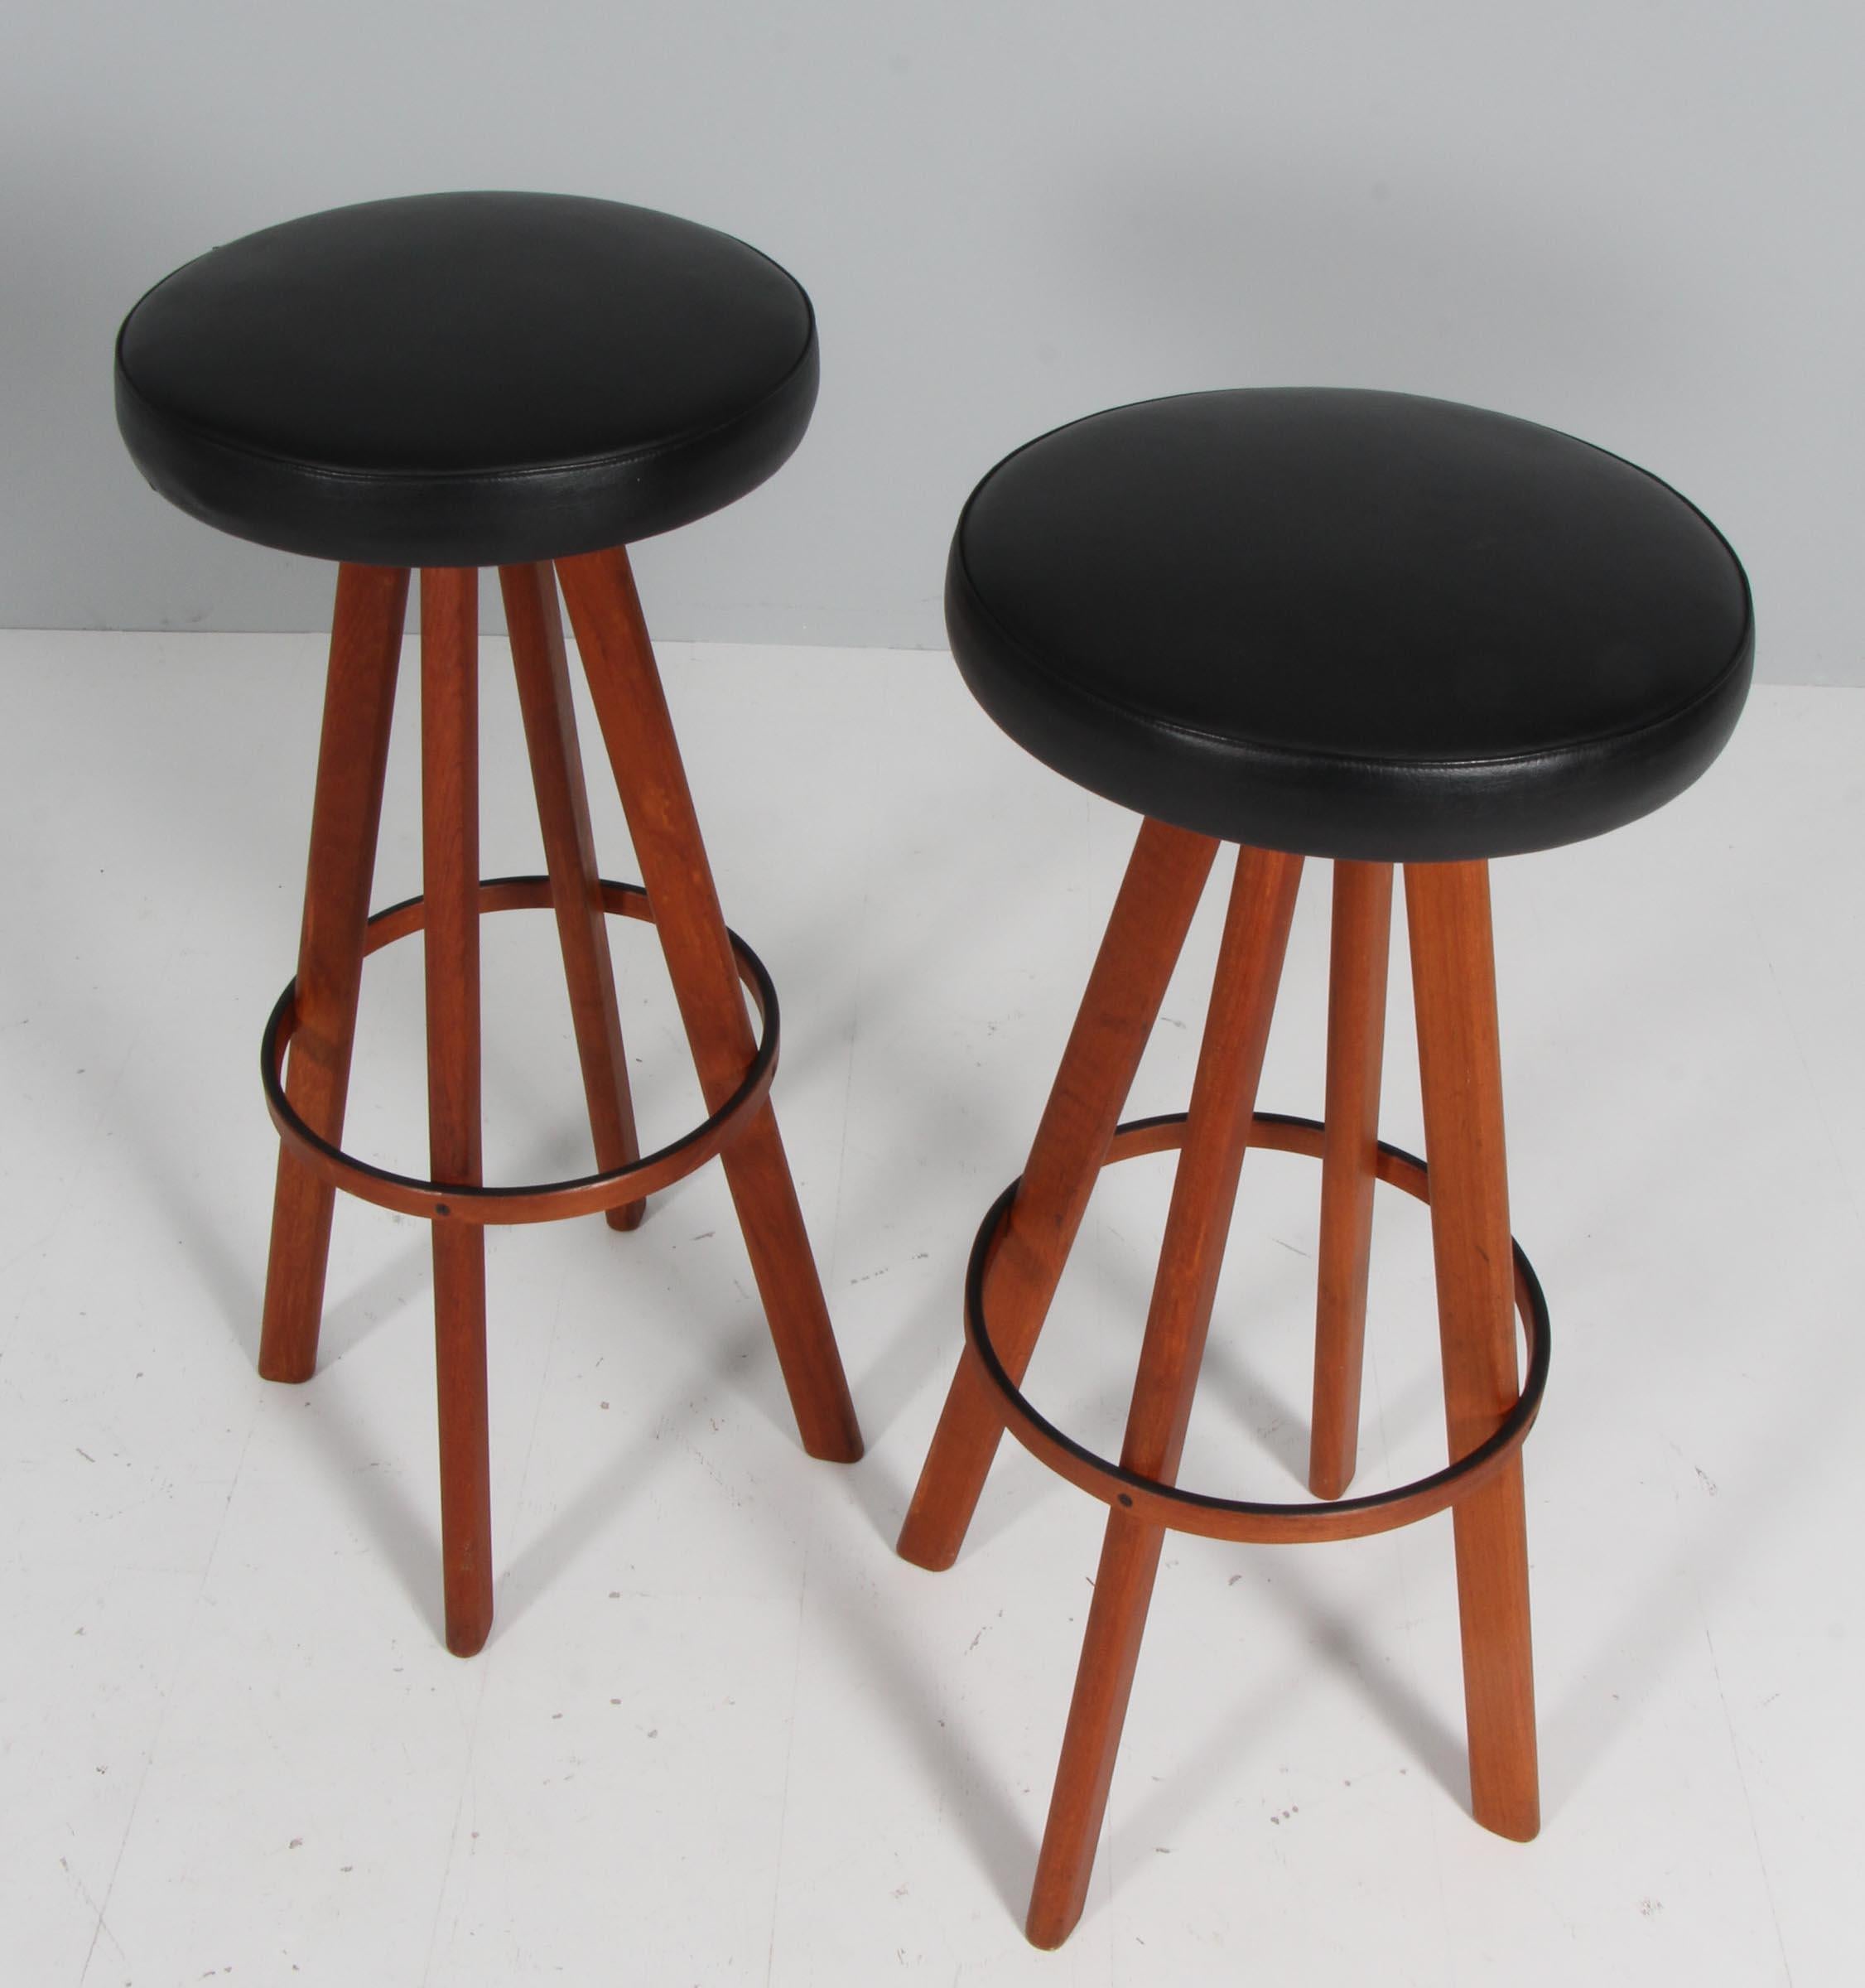 Hans Olsen bar stool with rotable seat of black skai.

Frame of solid teak.

Made by Frem Røjle, Denmark.